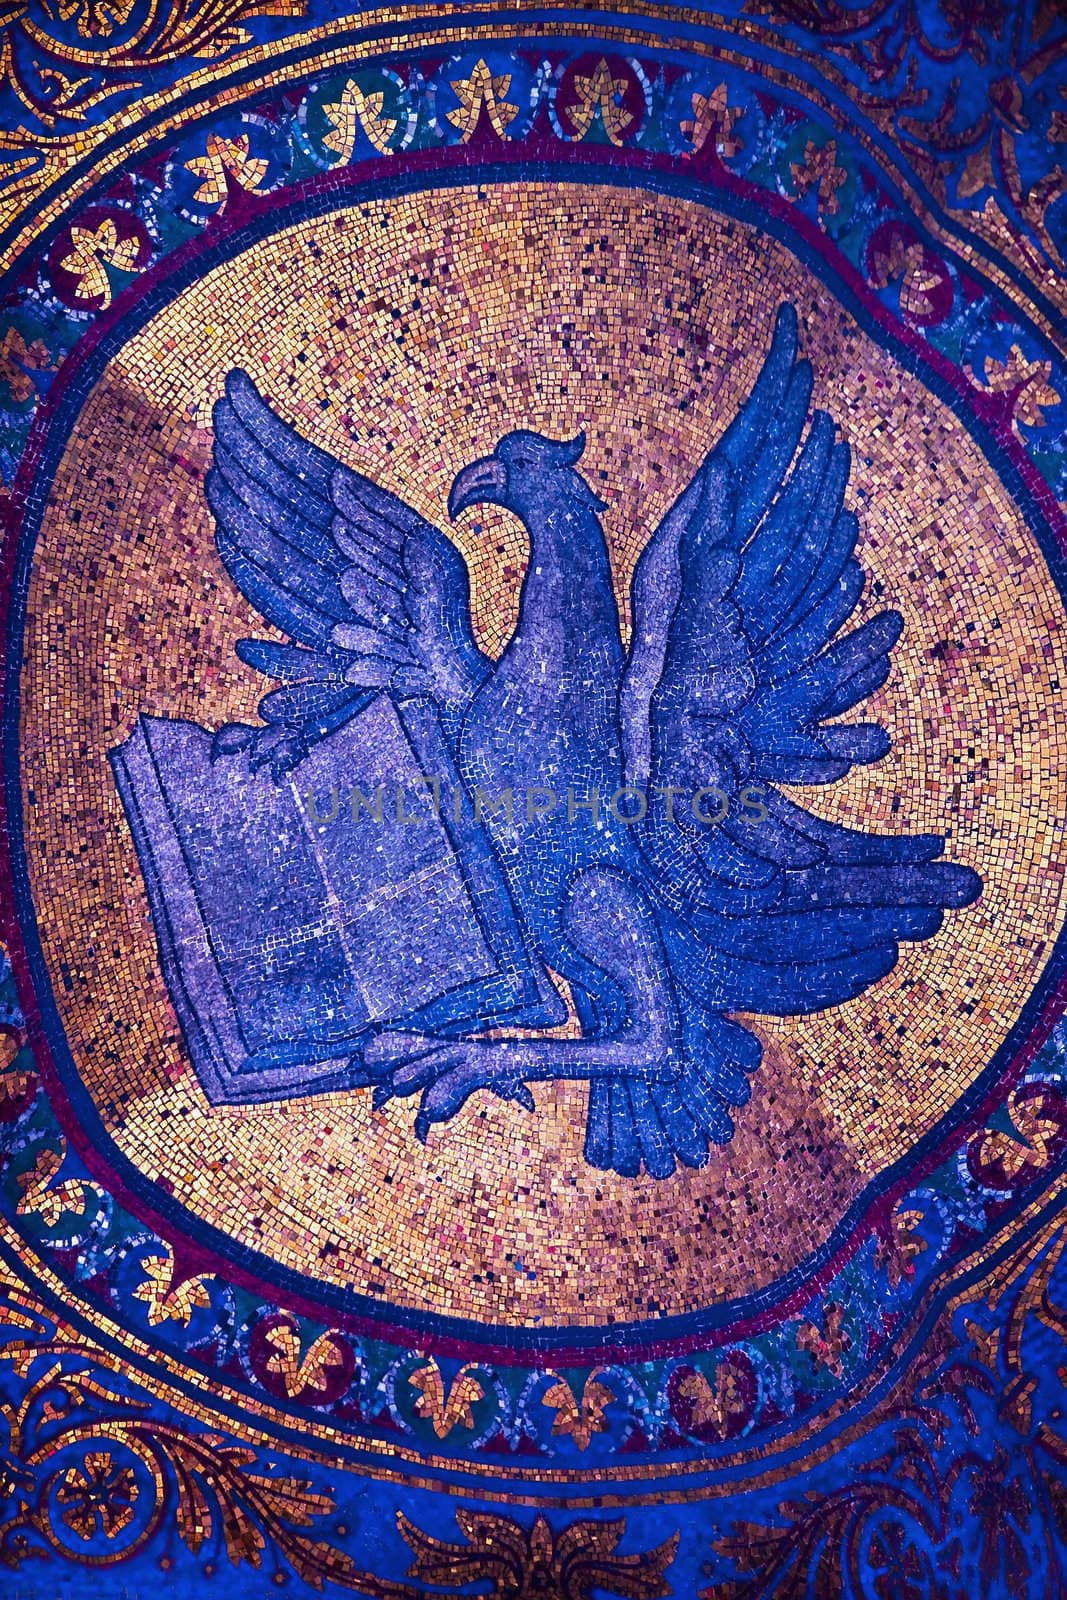 Eagle Mosaic Saint Mark's Basilica, Cathedral, Church Venice Italy